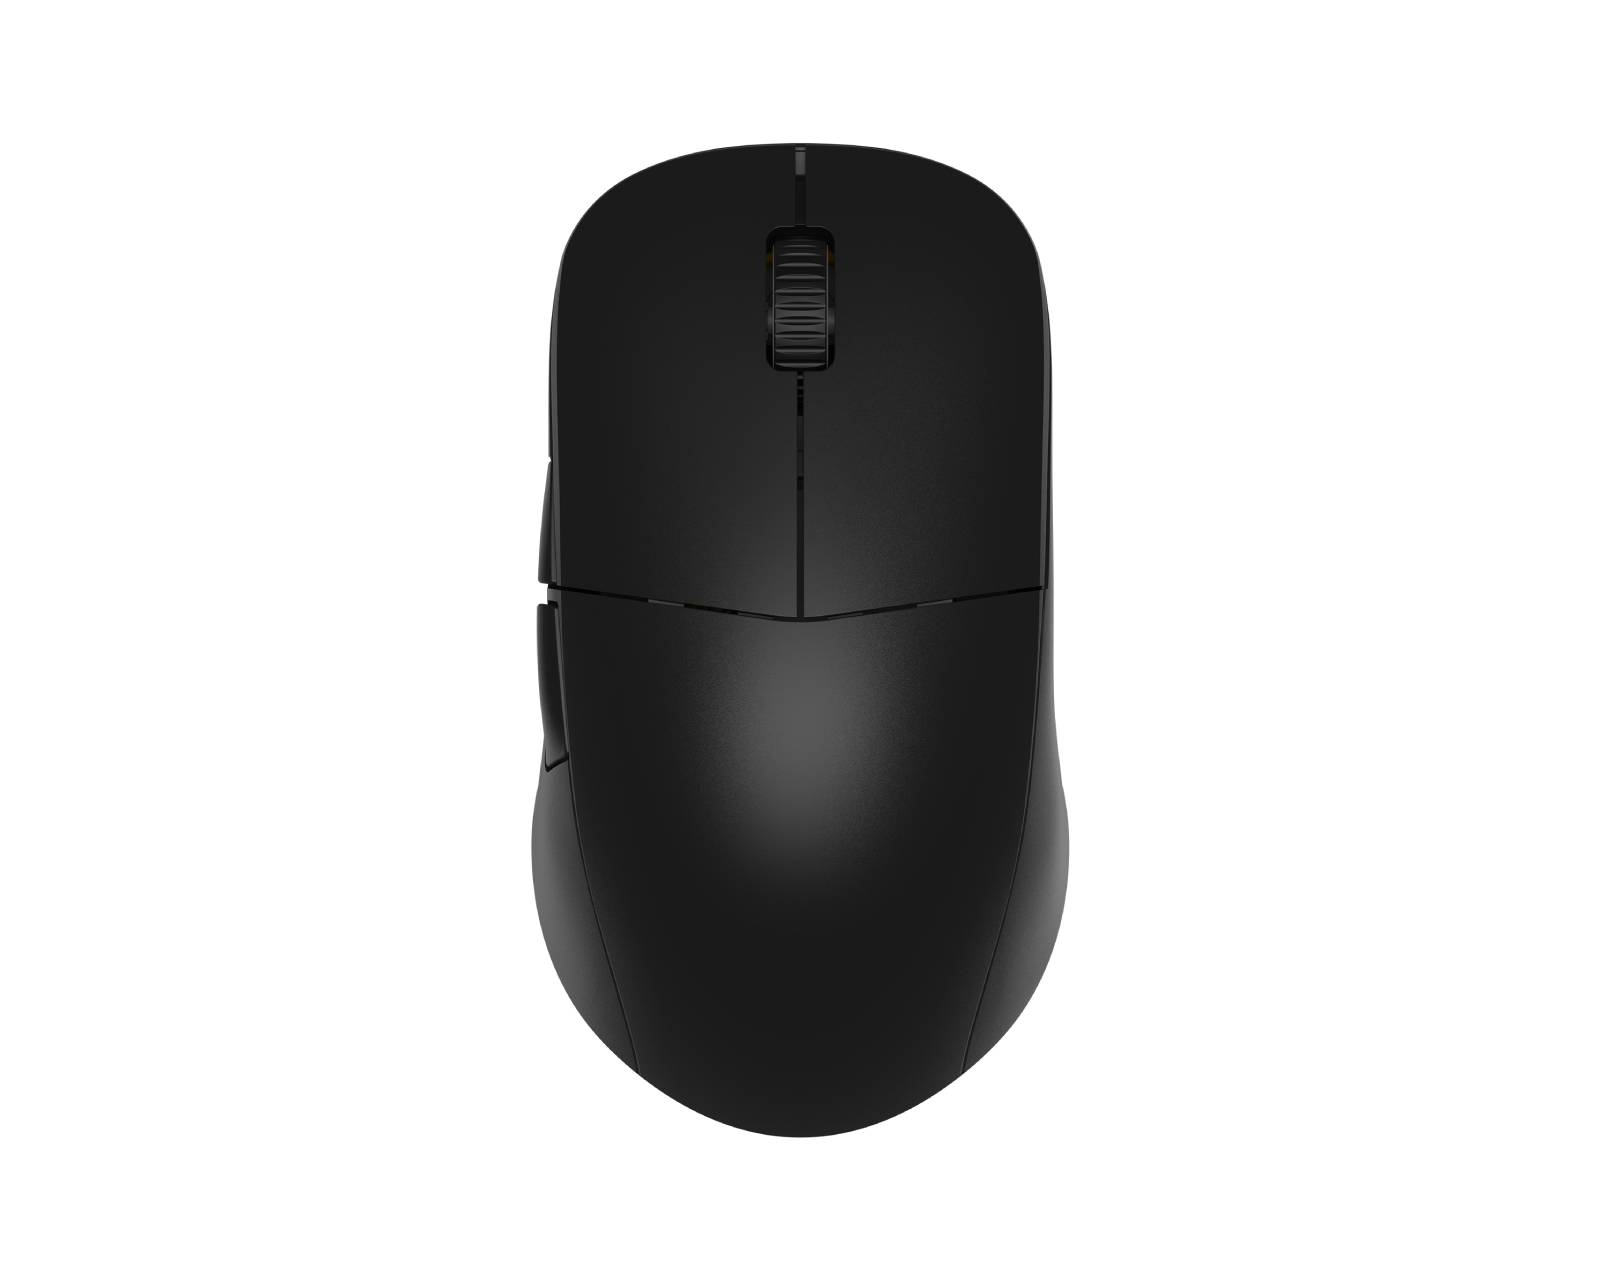 Endgame Gear XM2we Wireless Gaming Mouse - Black - MaxGaming.com